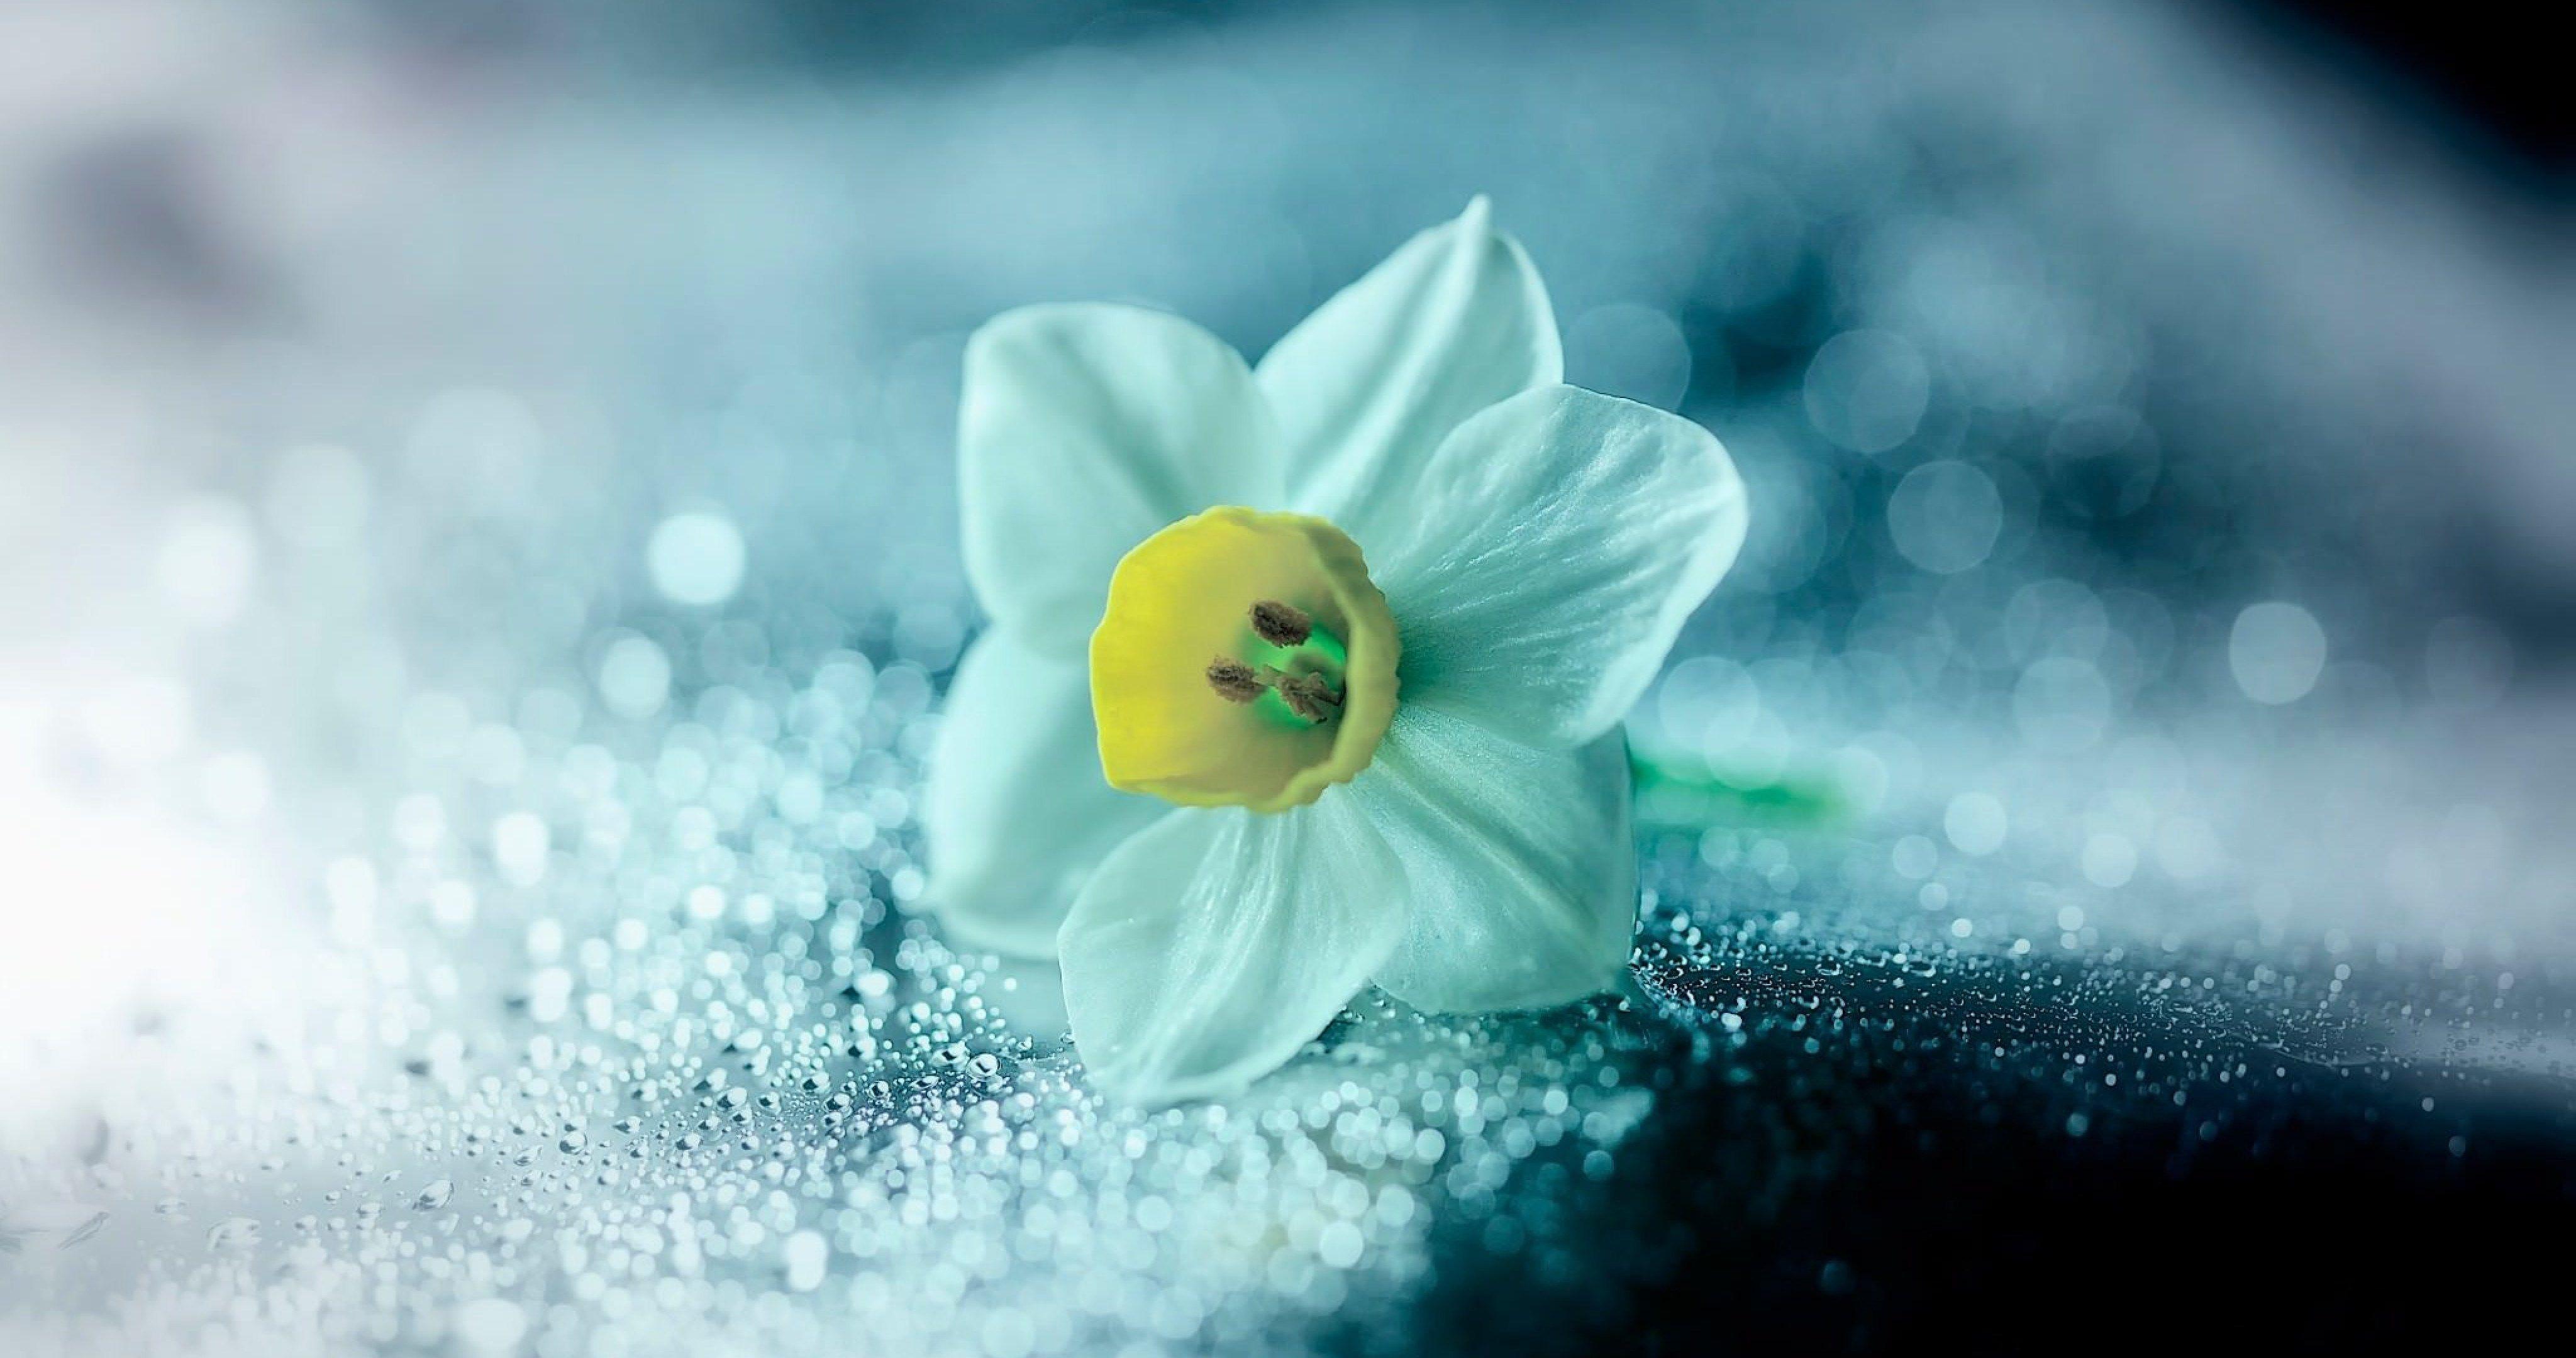 flower narcissus wallpaper 4k ultra HD wallpaper. Flower desktop wallpaper, Narcissus flower, Daffodils